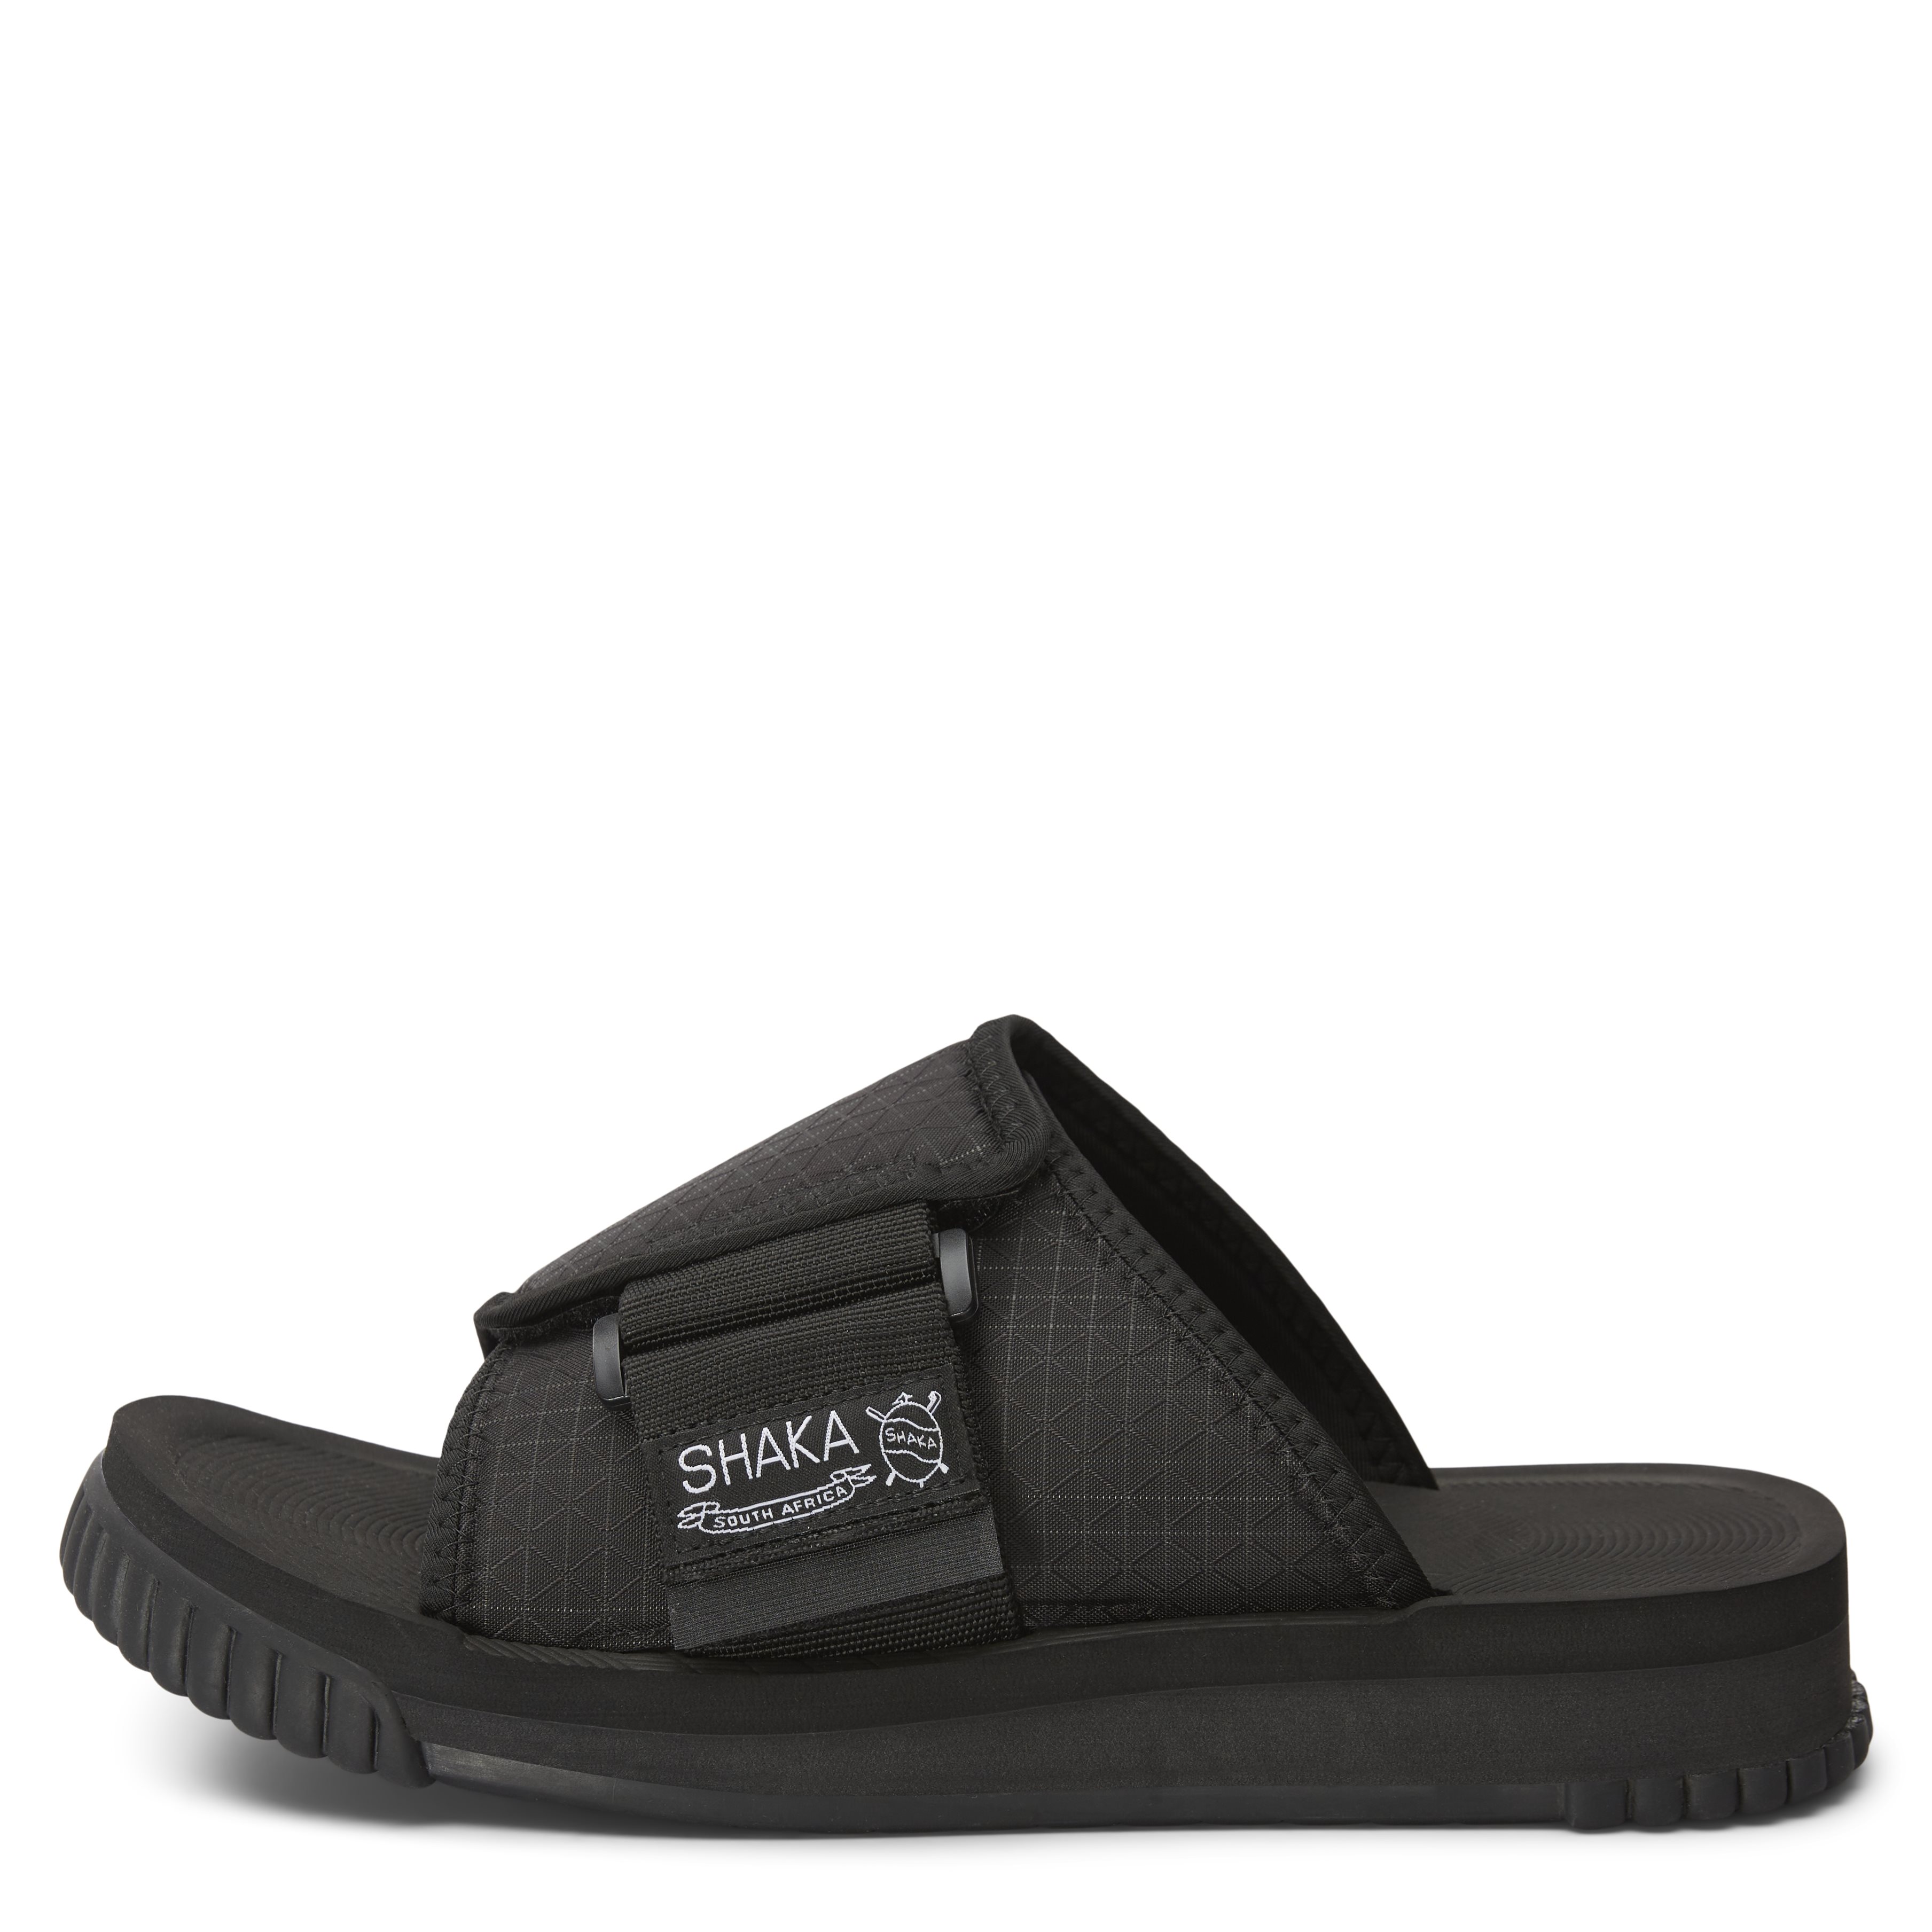 Spectra Shaka - Shoes - Black